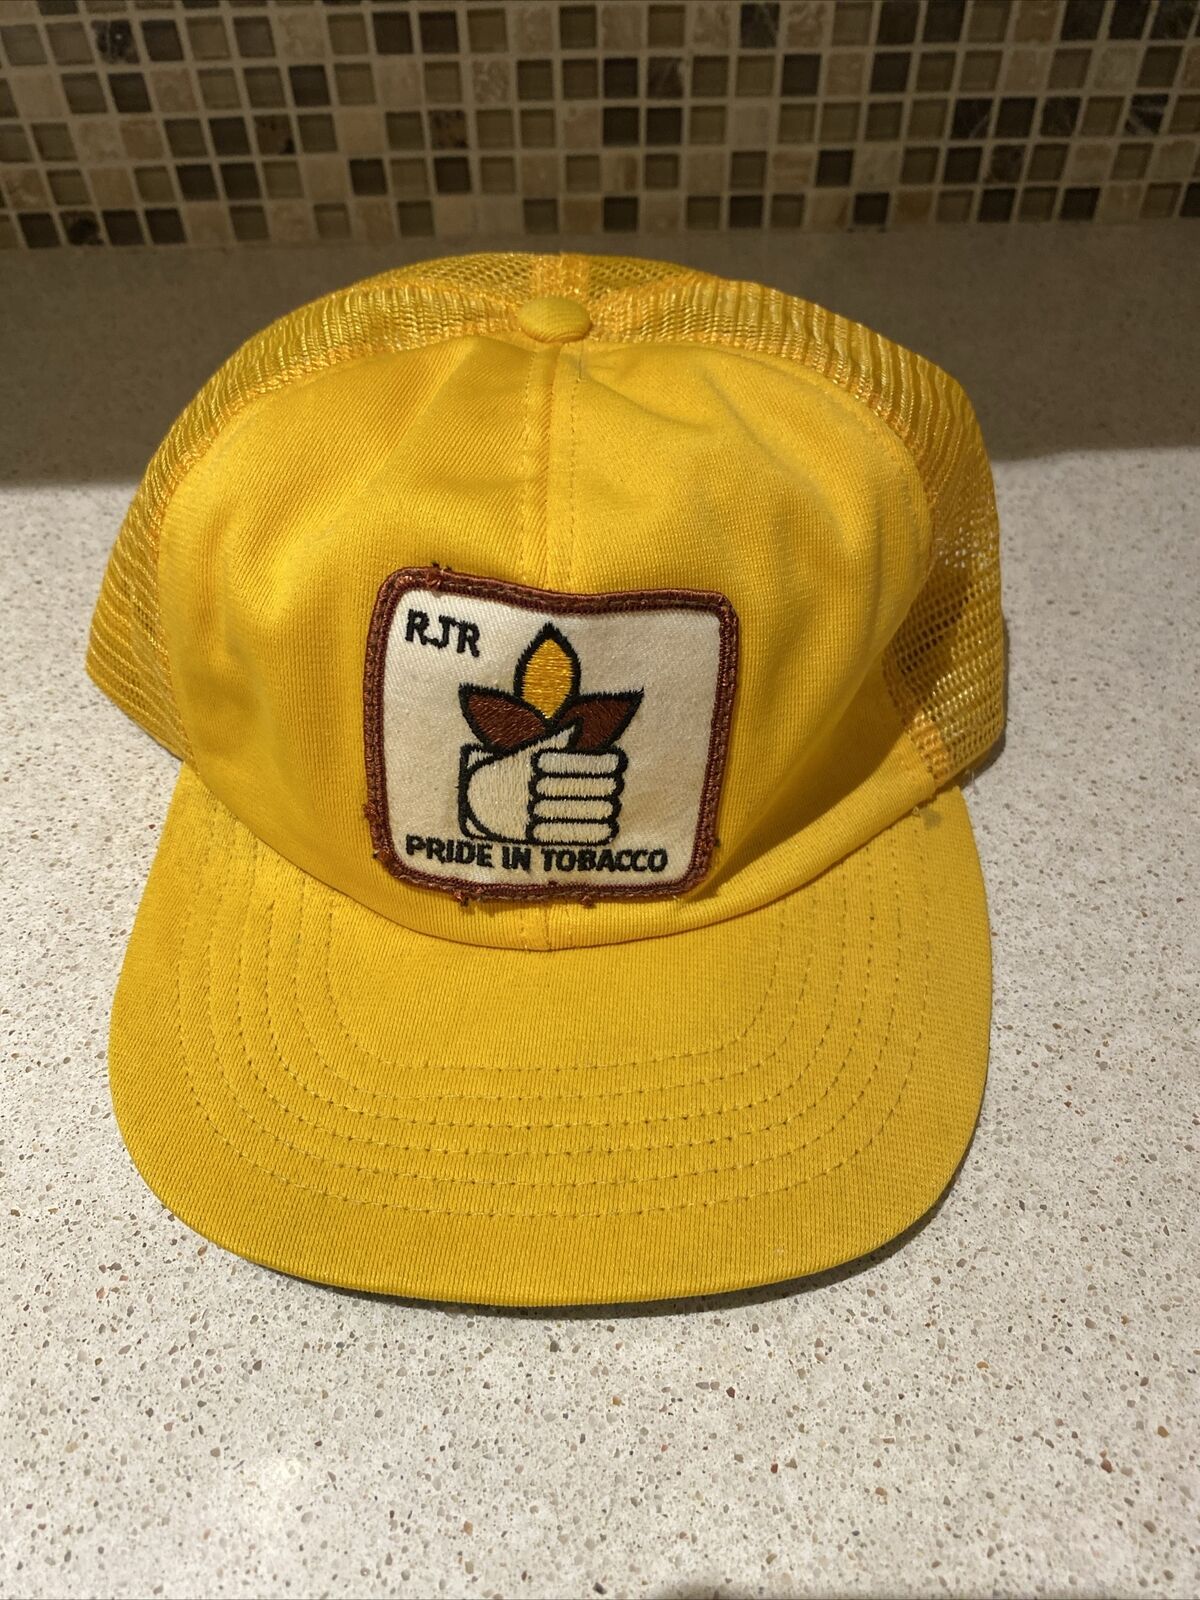 RJR Pride in Tobacco Yellow Trucker Hat / Cap.  Vintage, Mesh, Snapback